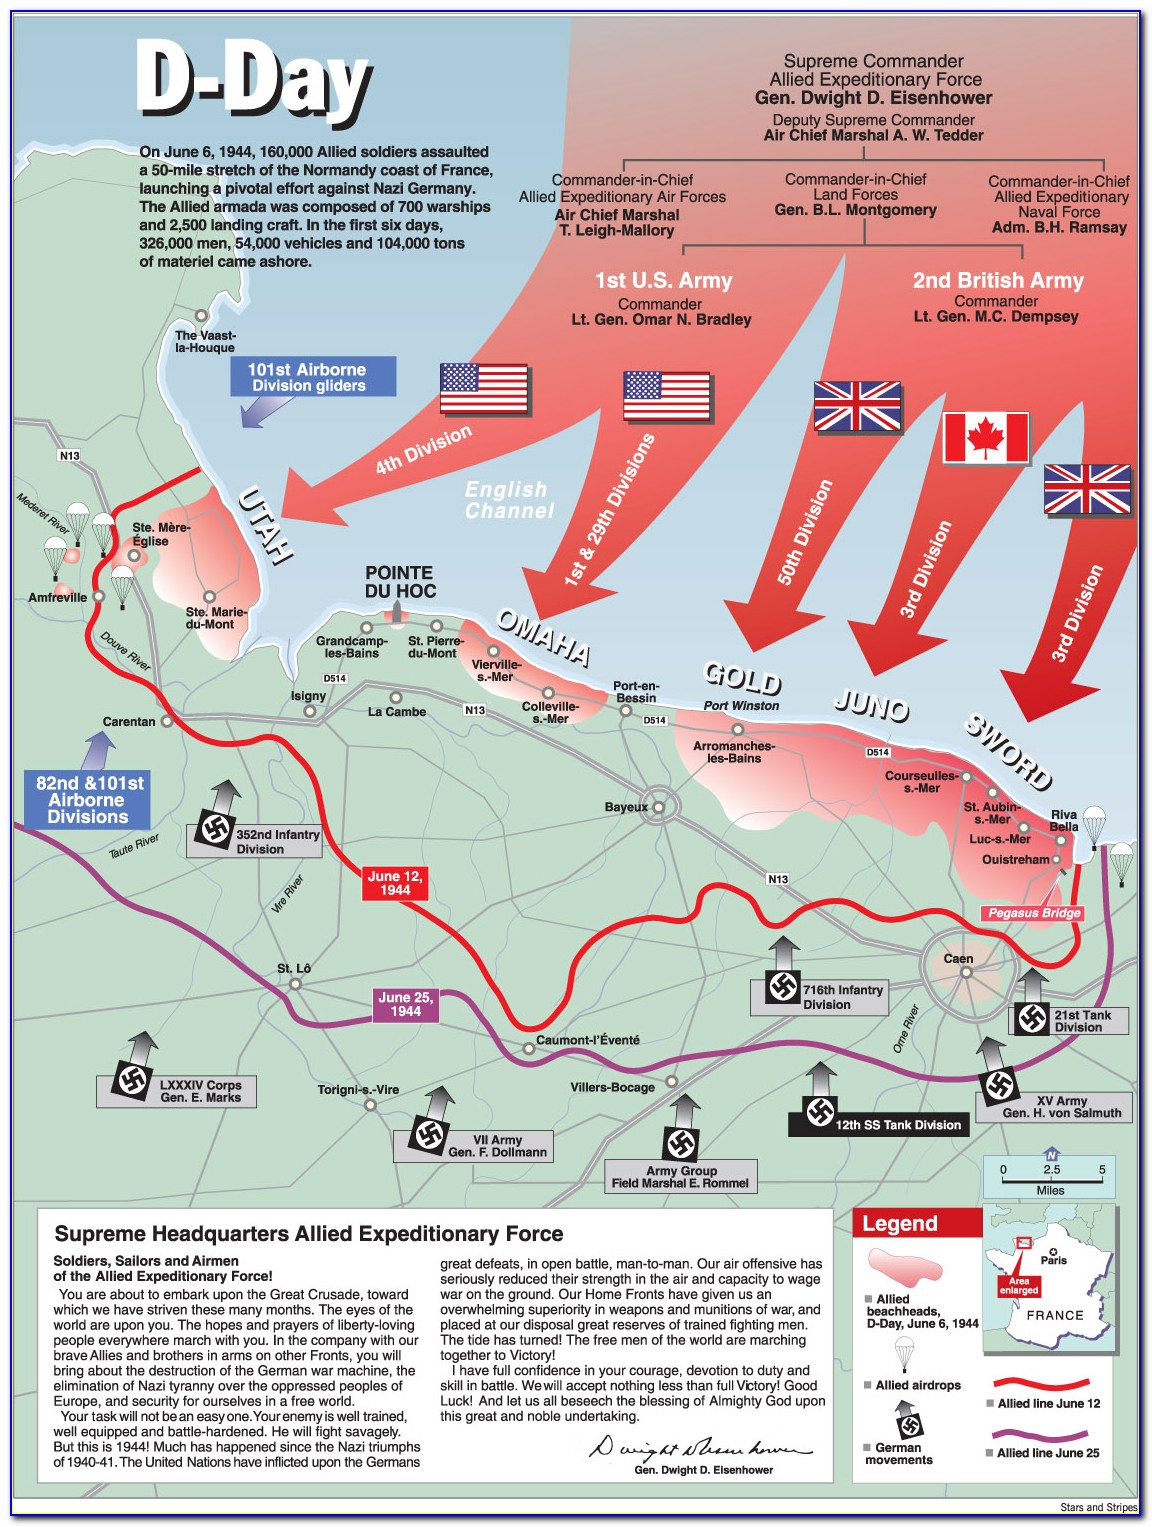 Normandy Landings Map